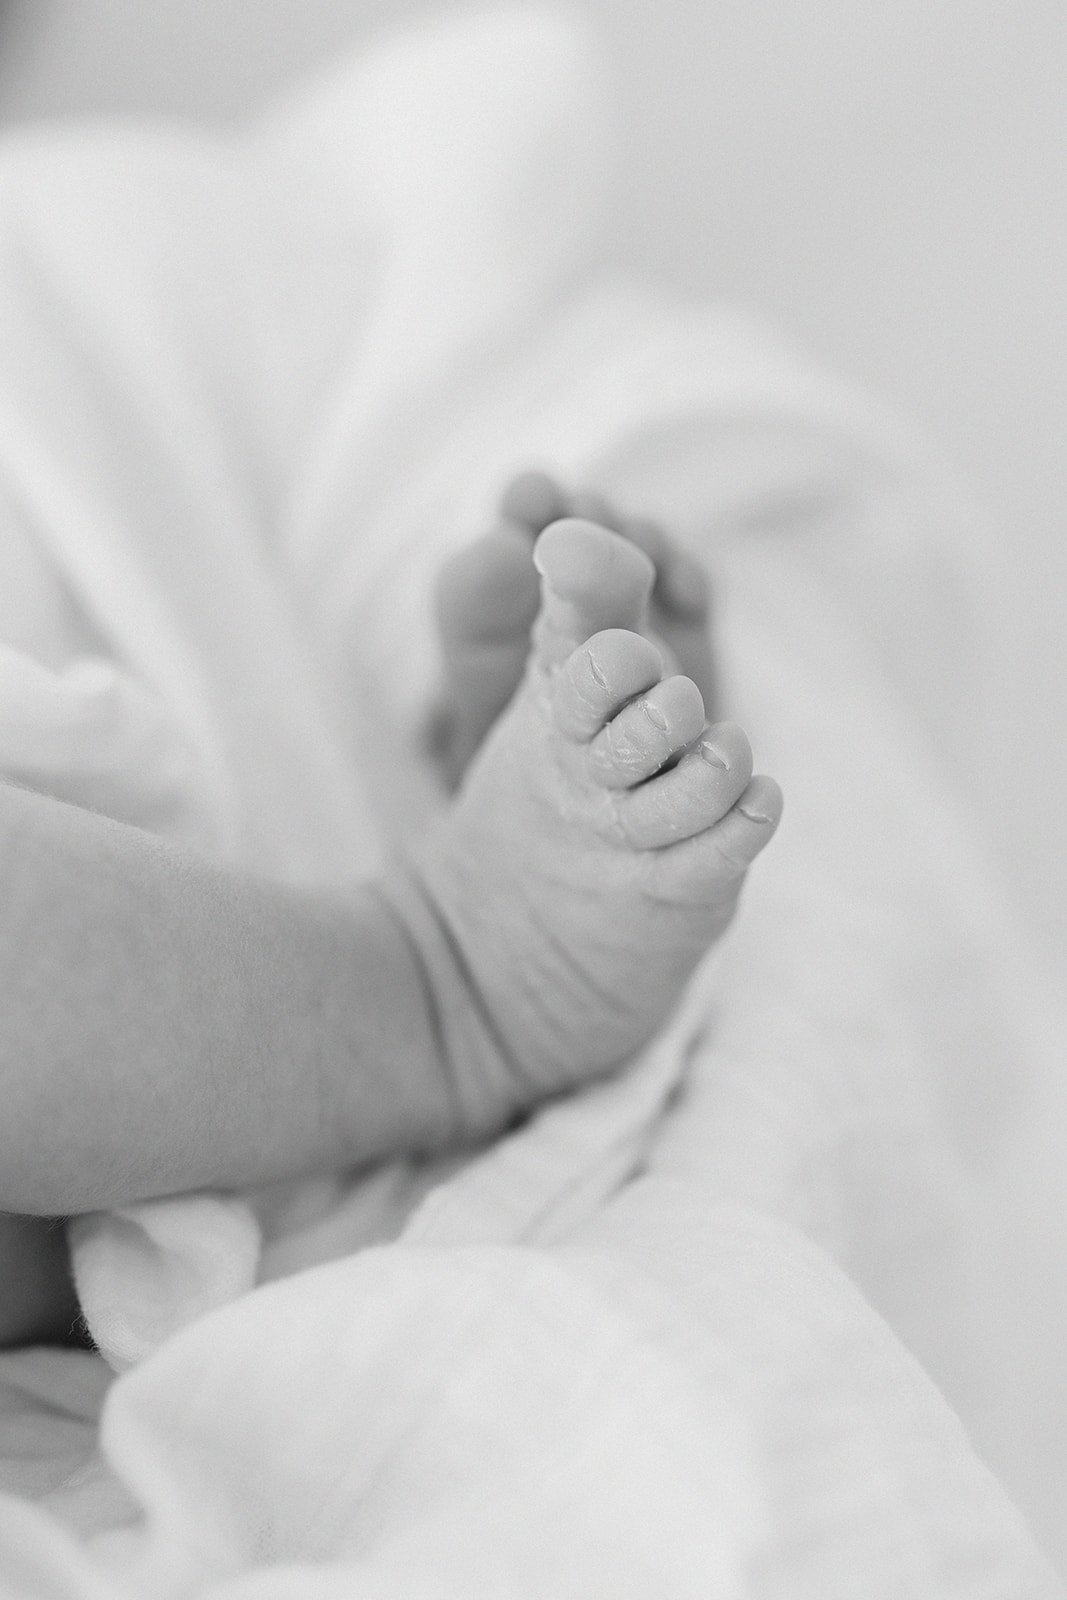 houston-newborn-photographer-kimberly-brooke-lifestlye-baby-356.jpg